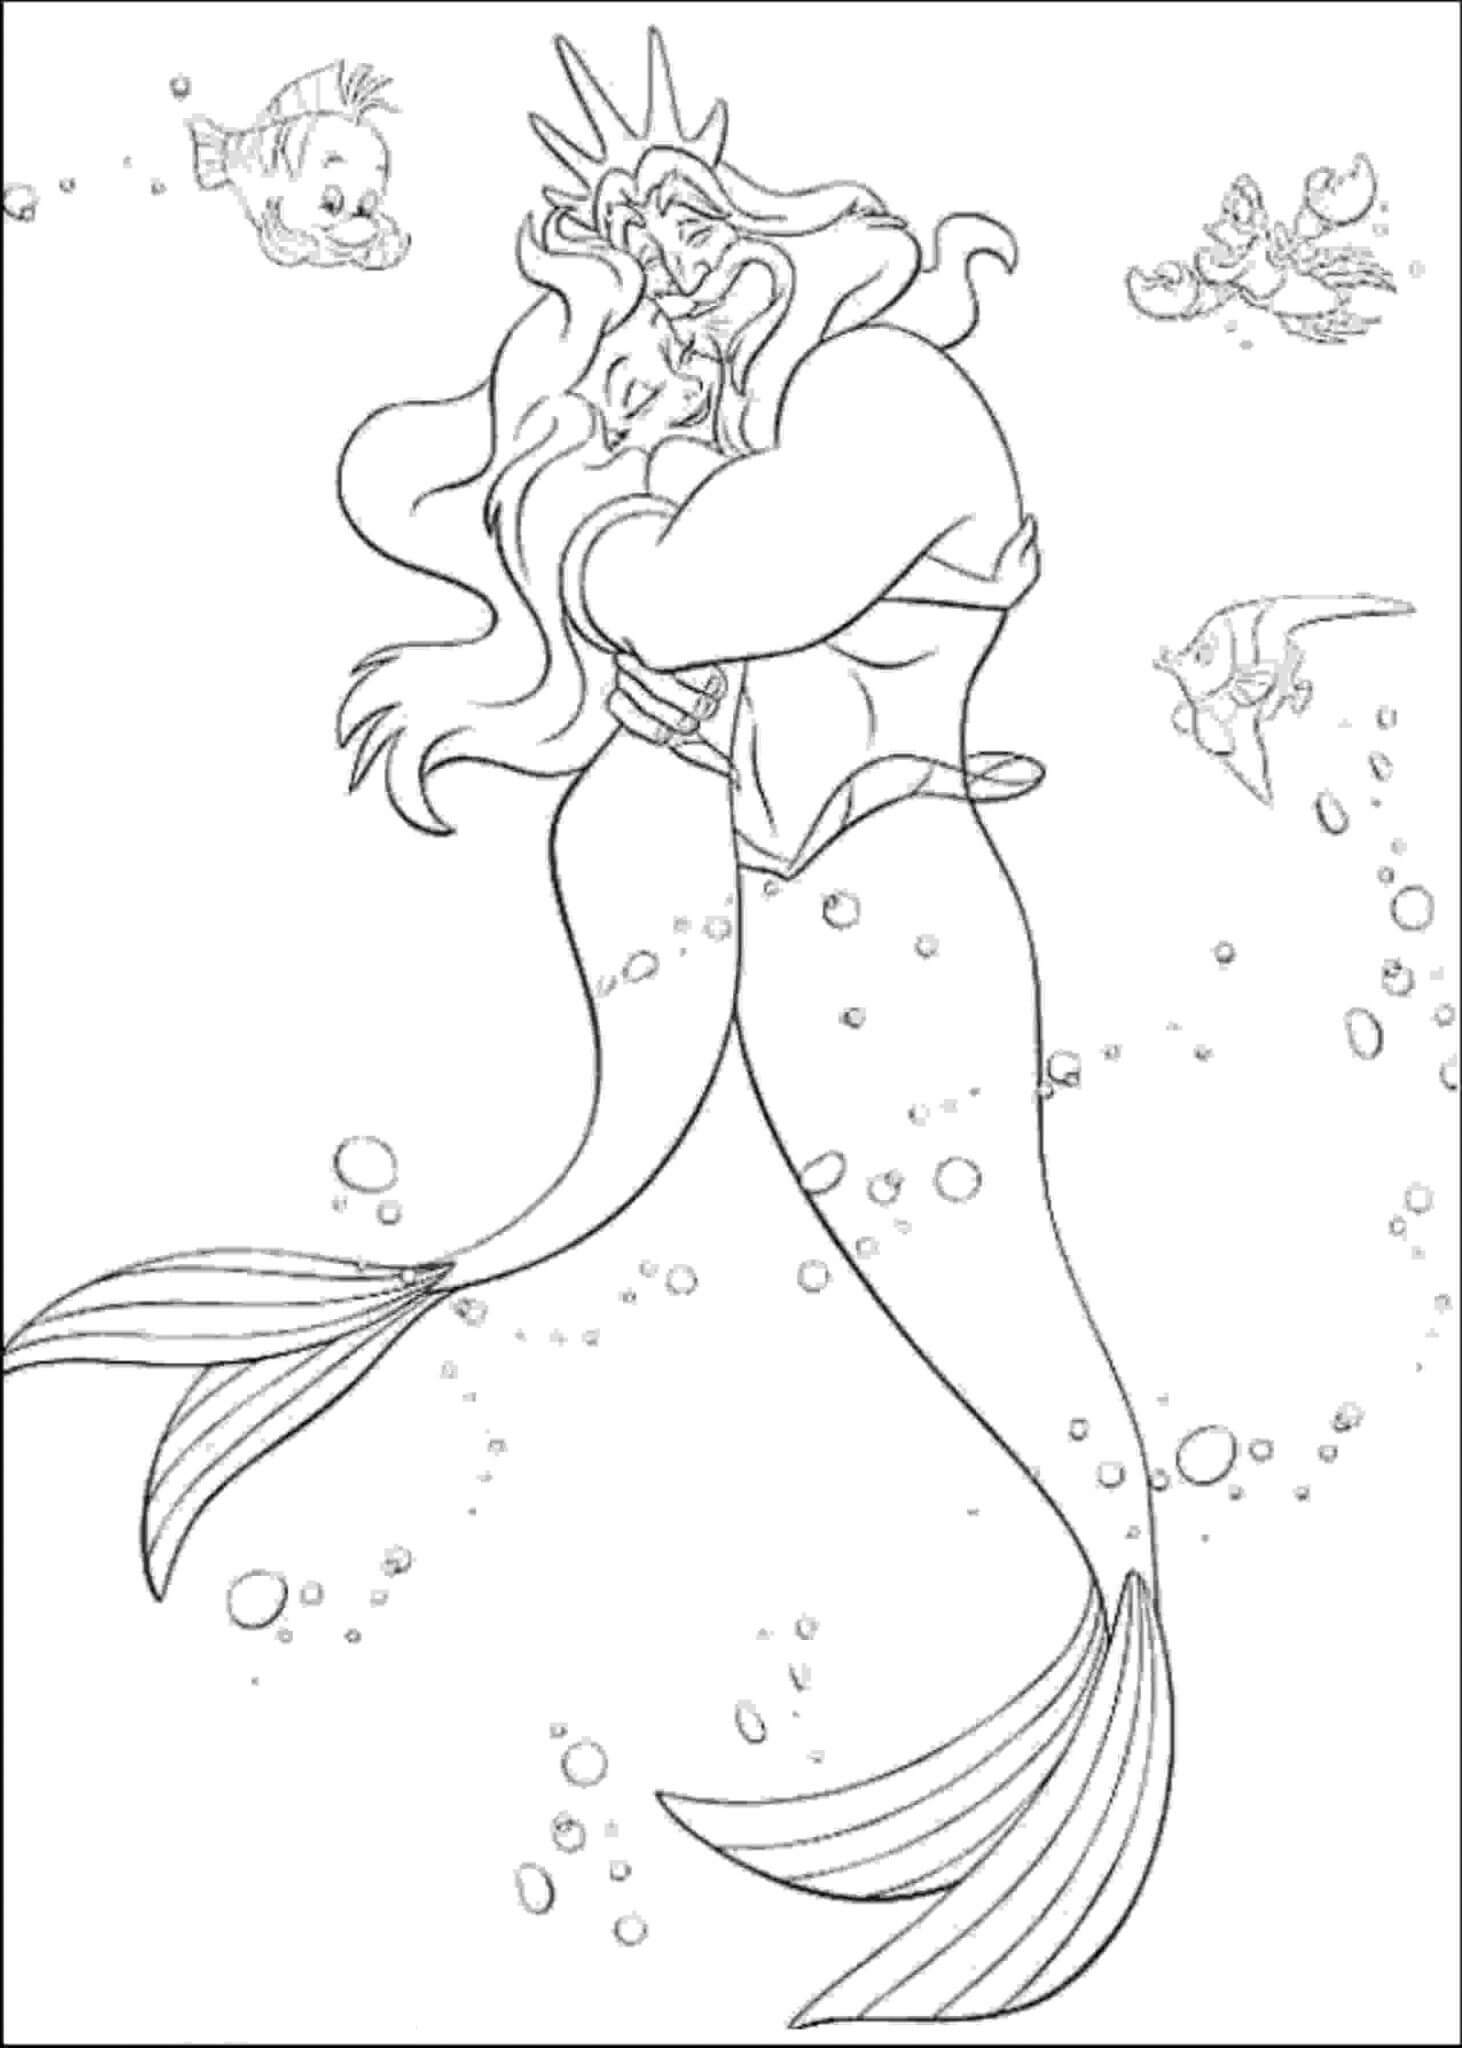 Aquaman Abrazando a la Sirena Ariel